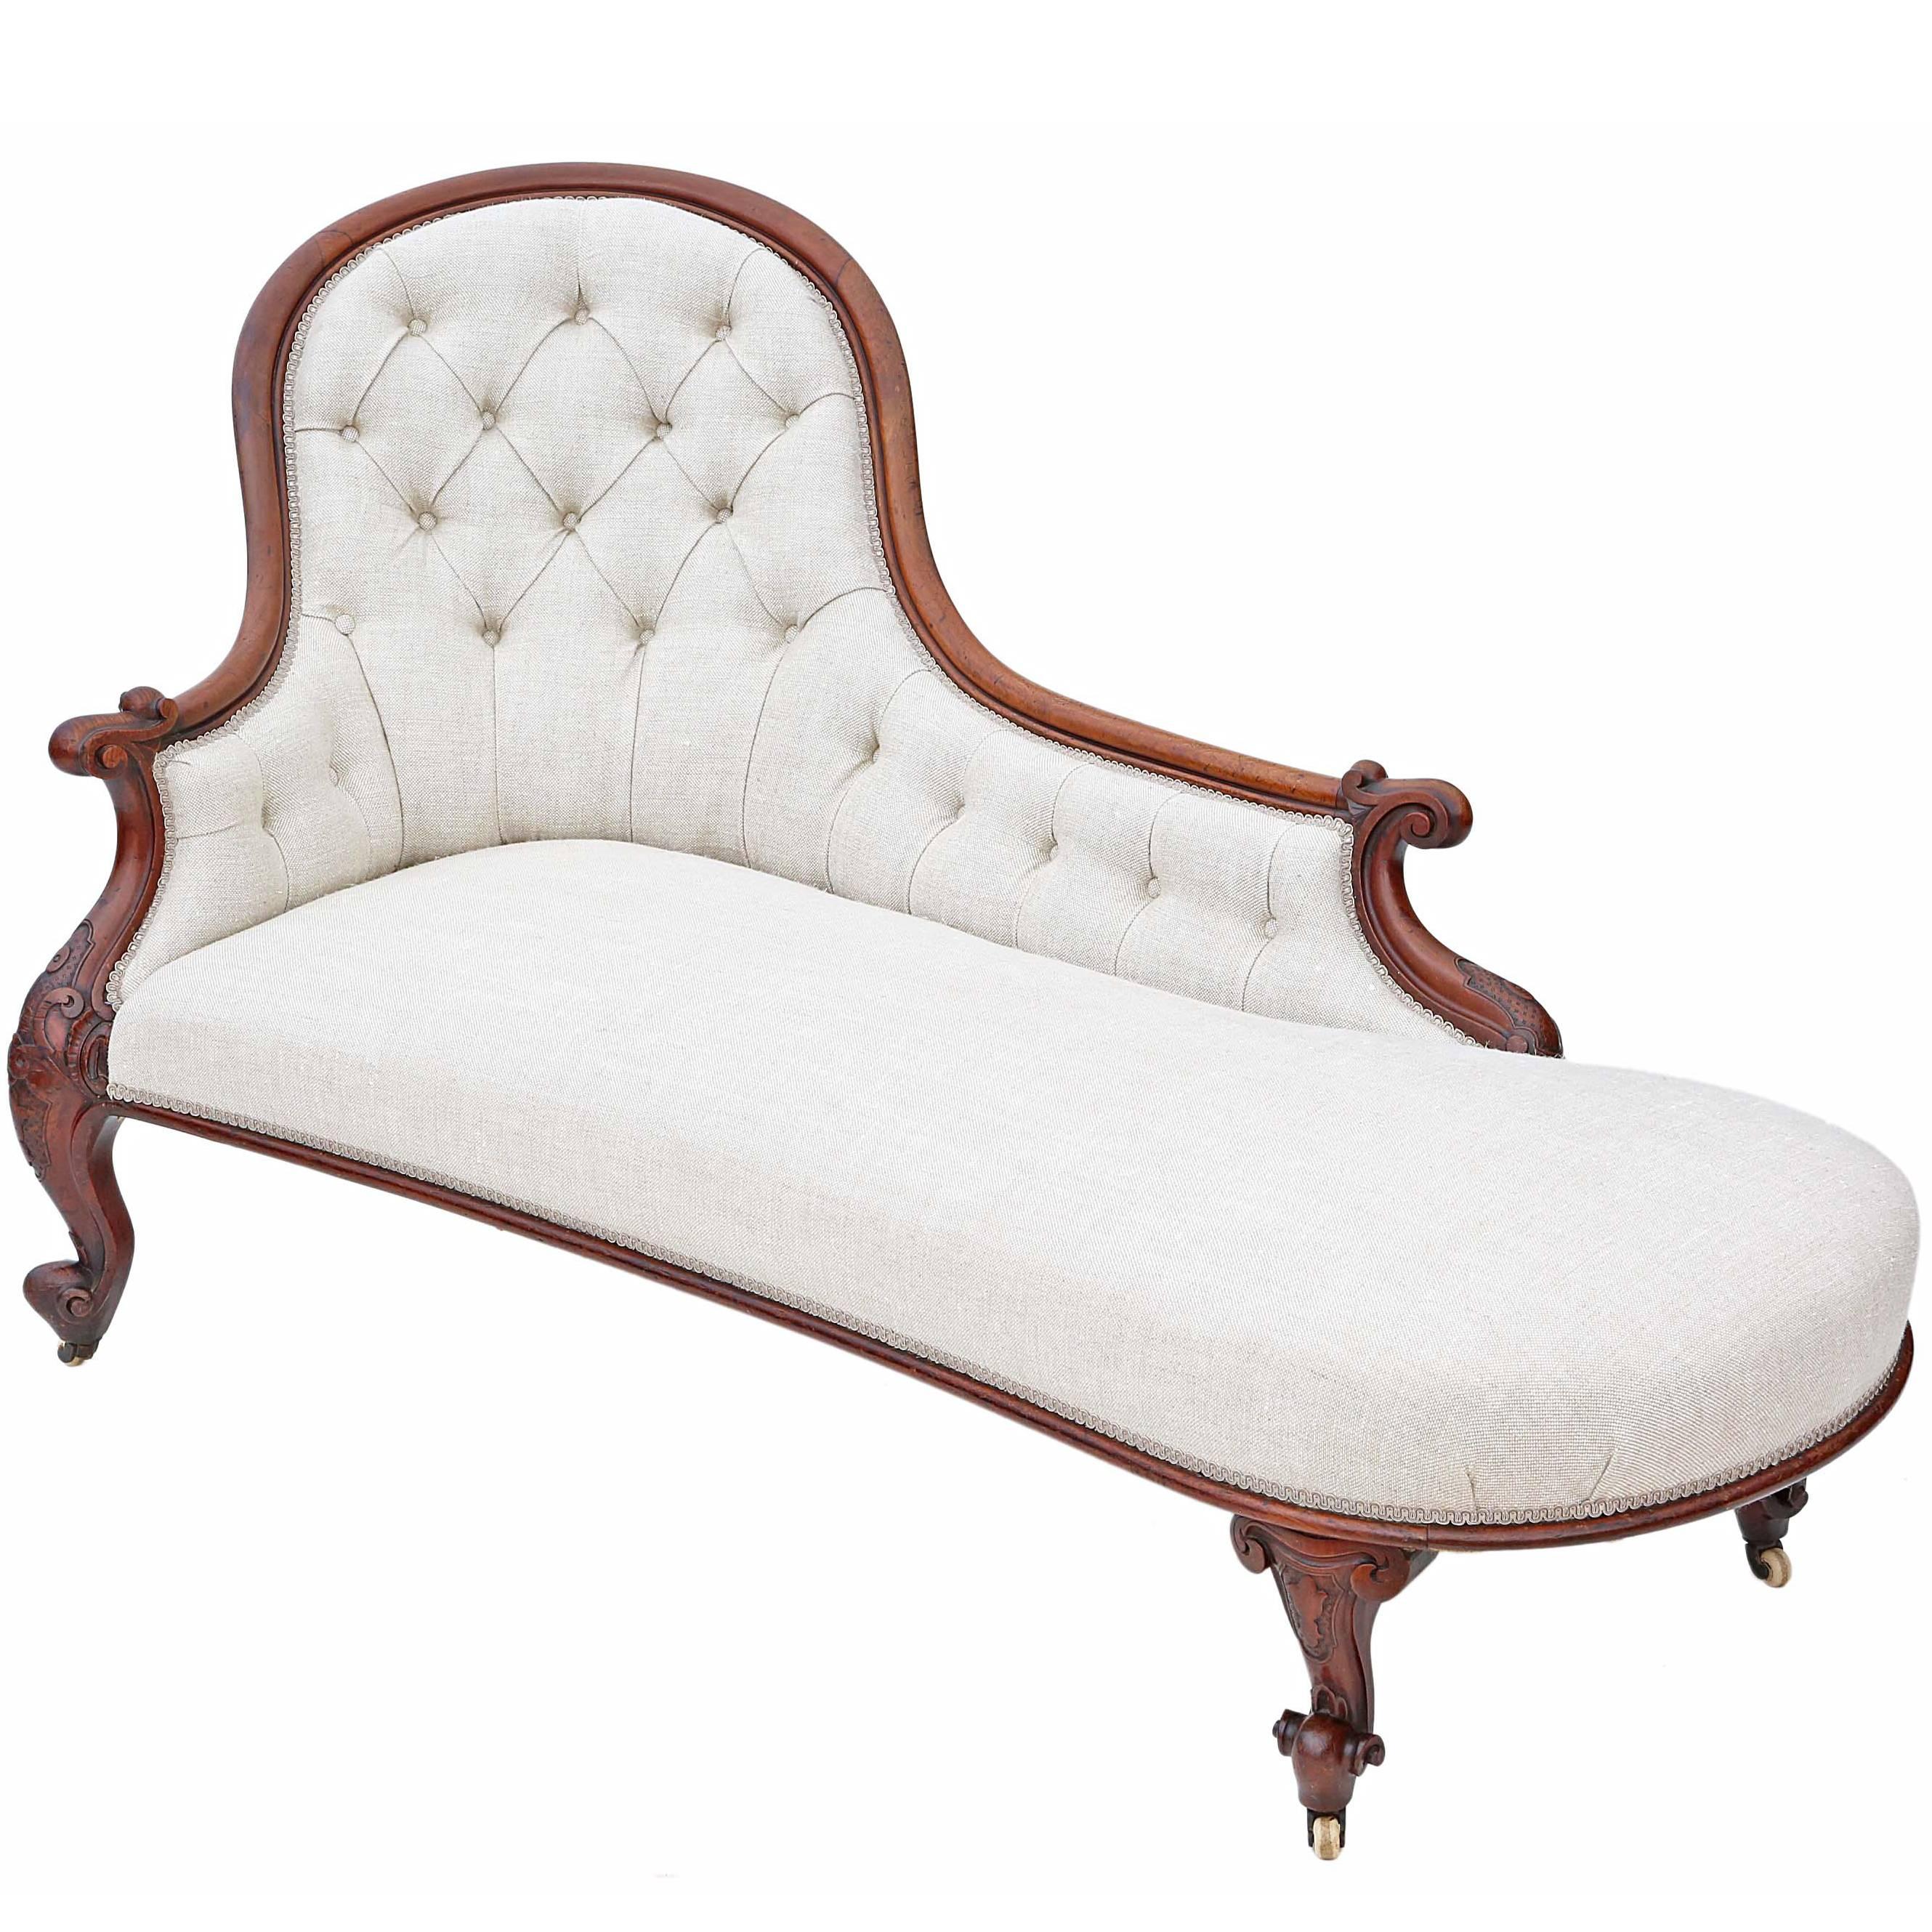 Antique Quality Victorian circa 1860 Mahogany Chaise Longue Sofa